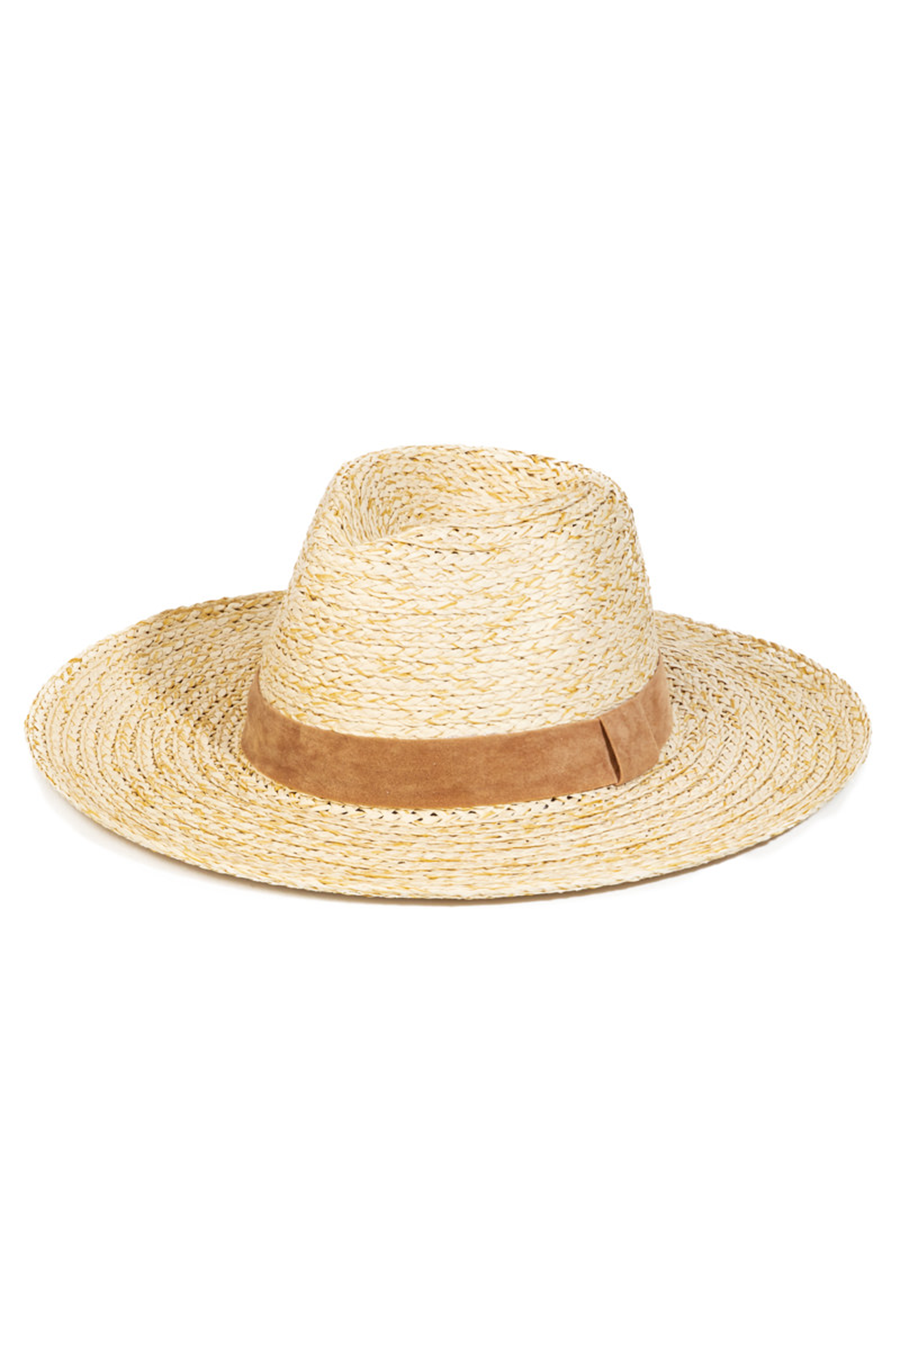 Flat Brim Straw Hat | Ivory/Tan - Main Image Number 1 of 1